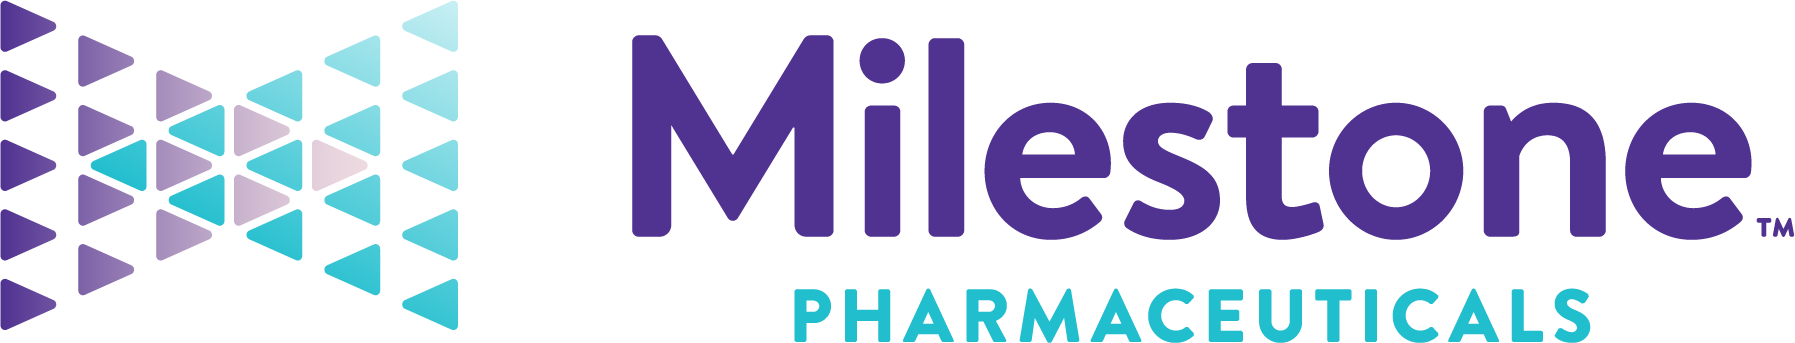 Milestone Pharmaceuticals
 logo large (transparent PNG)